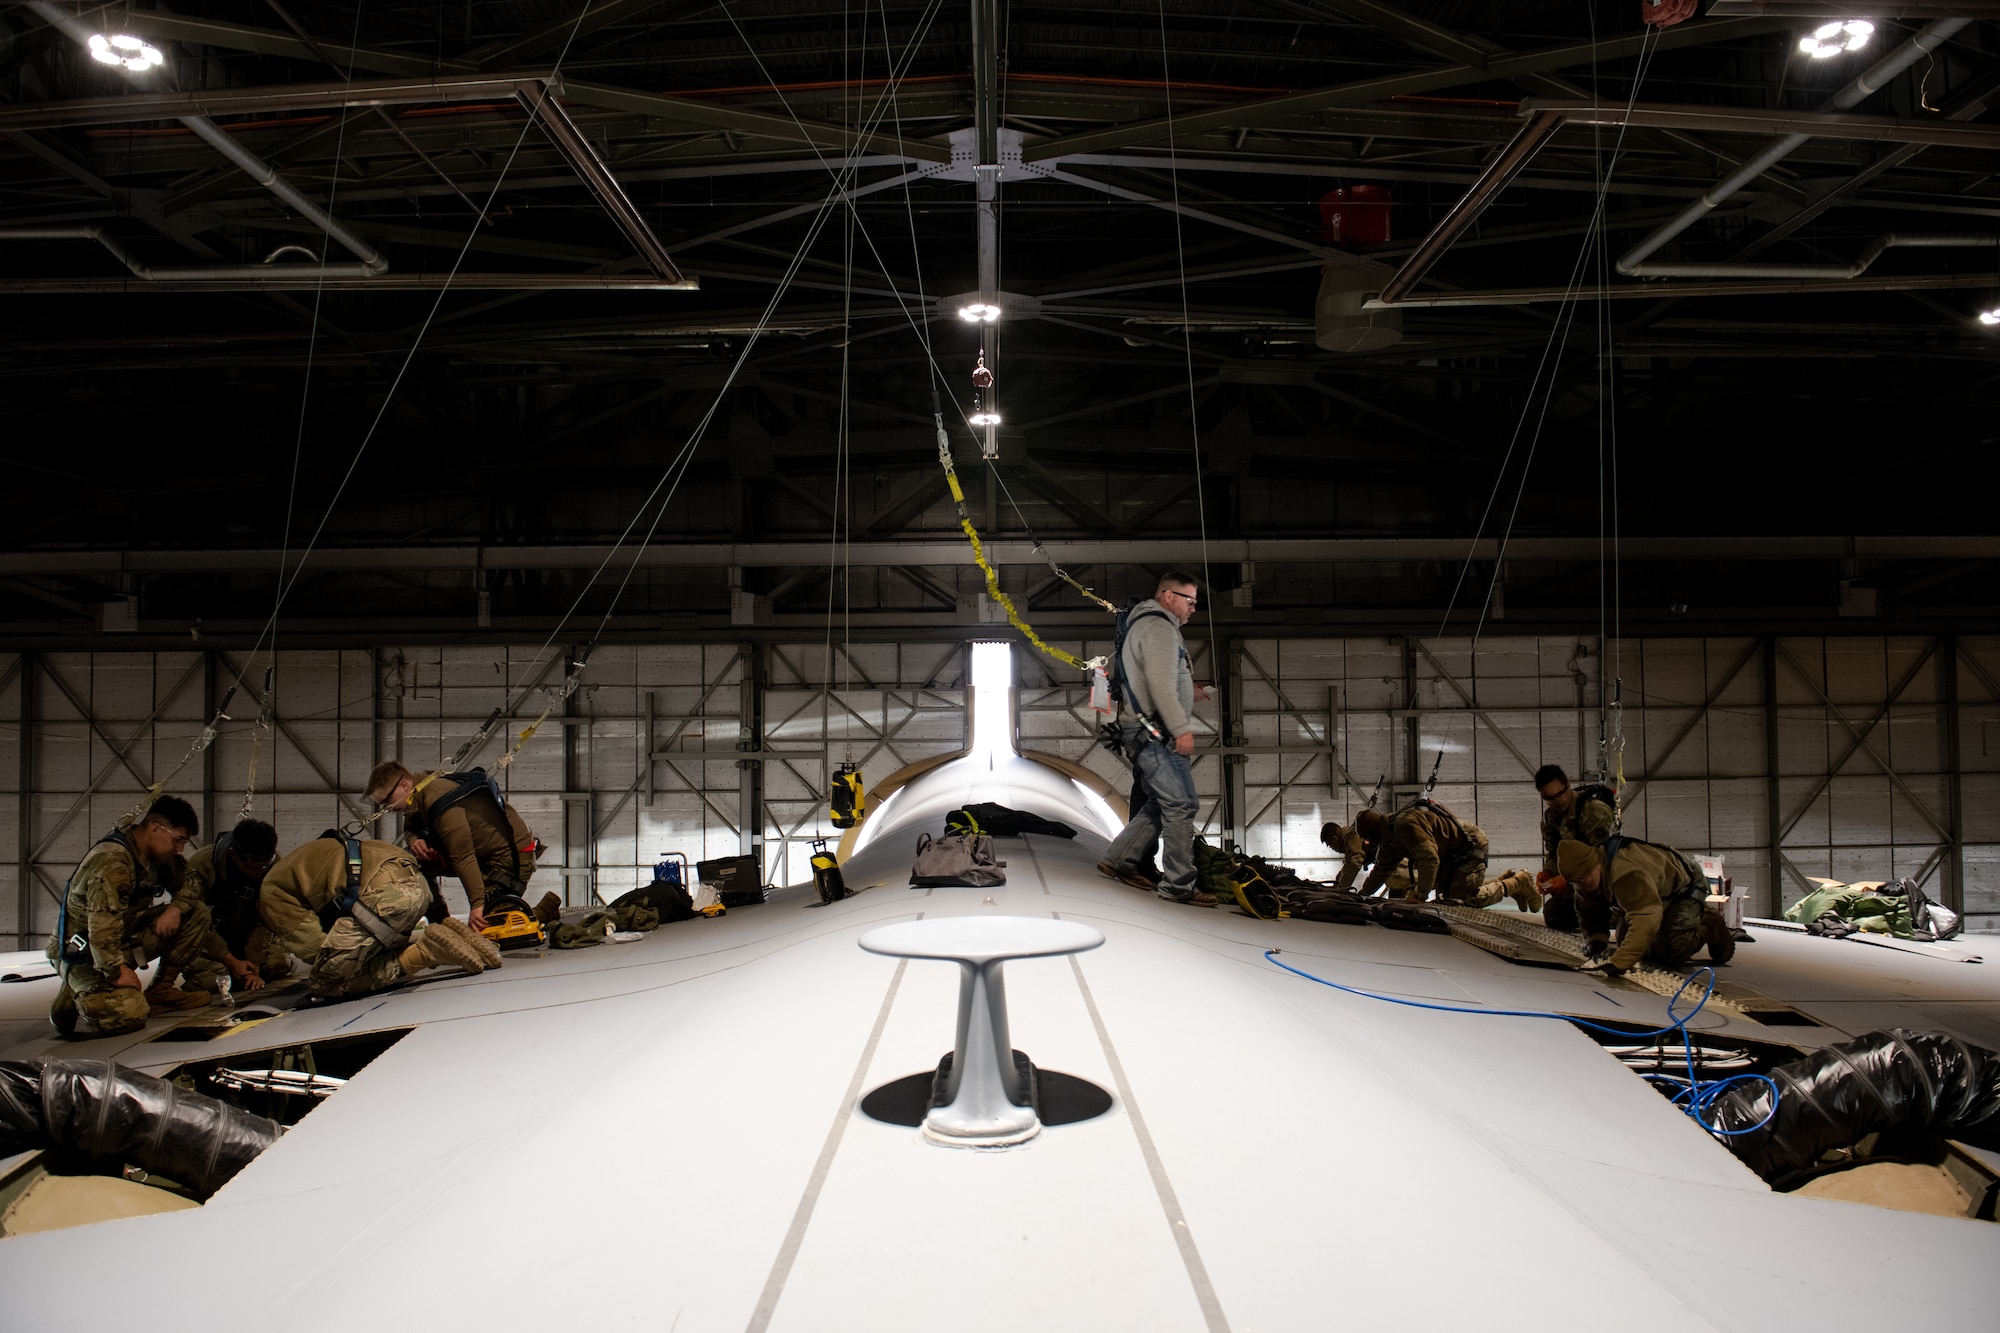 Airmen fixing an aircraft's wing